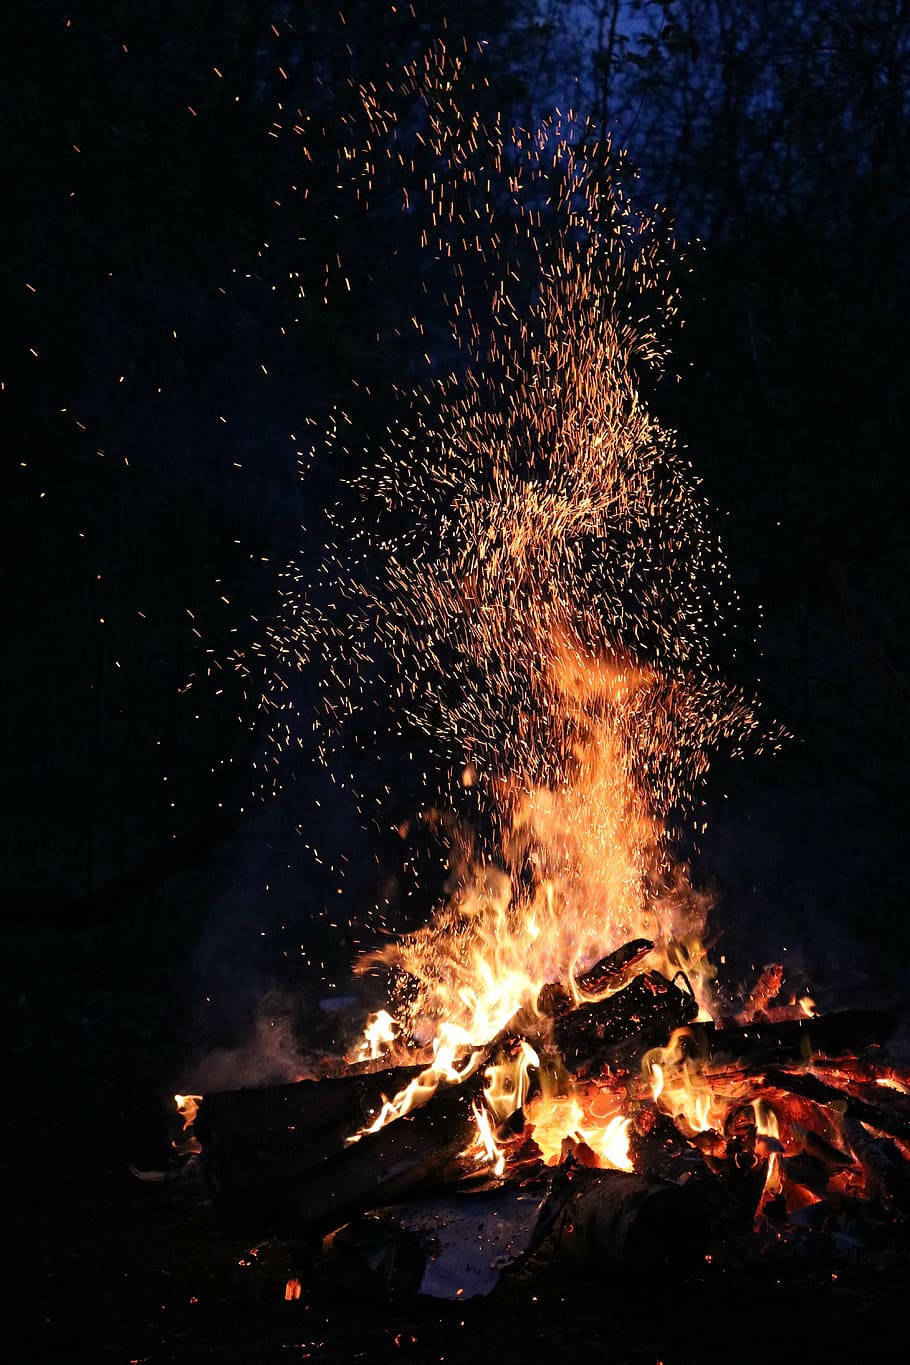 夜間, 森林, コスター, 炎, スパーク, 発熱, 火, 薪, 火傷, 火災-自然現象